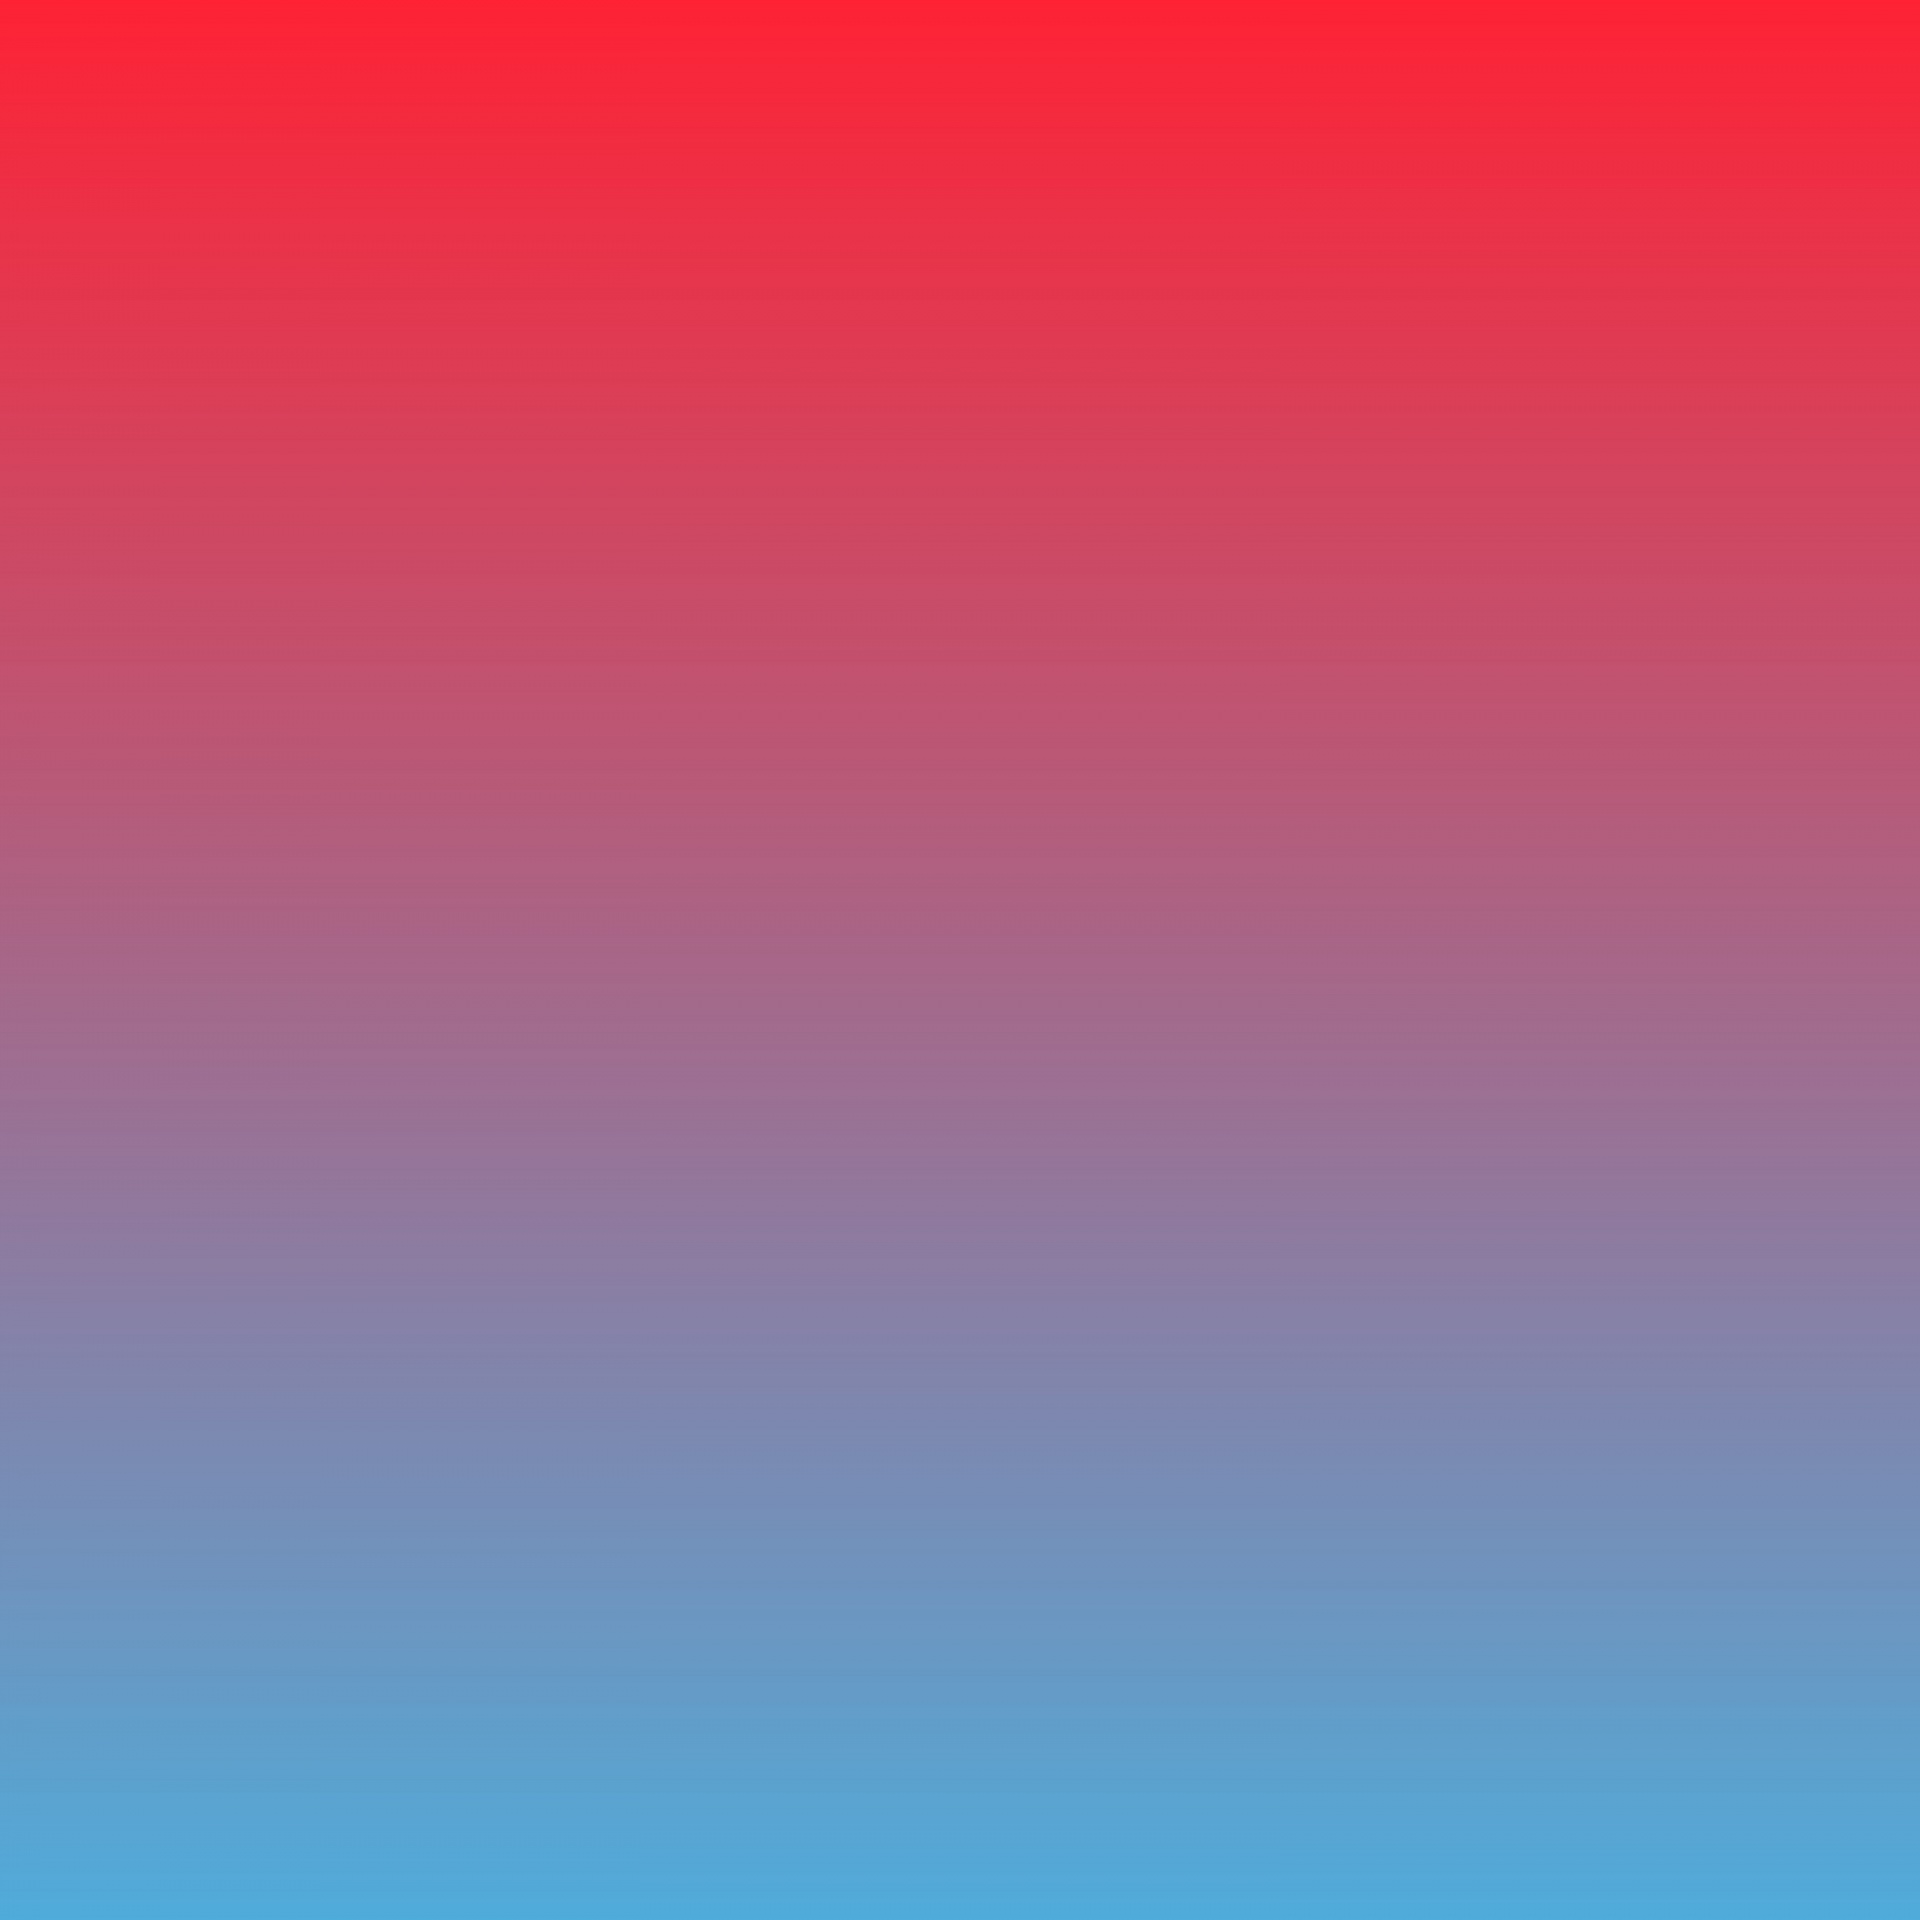 red white blue gradient background